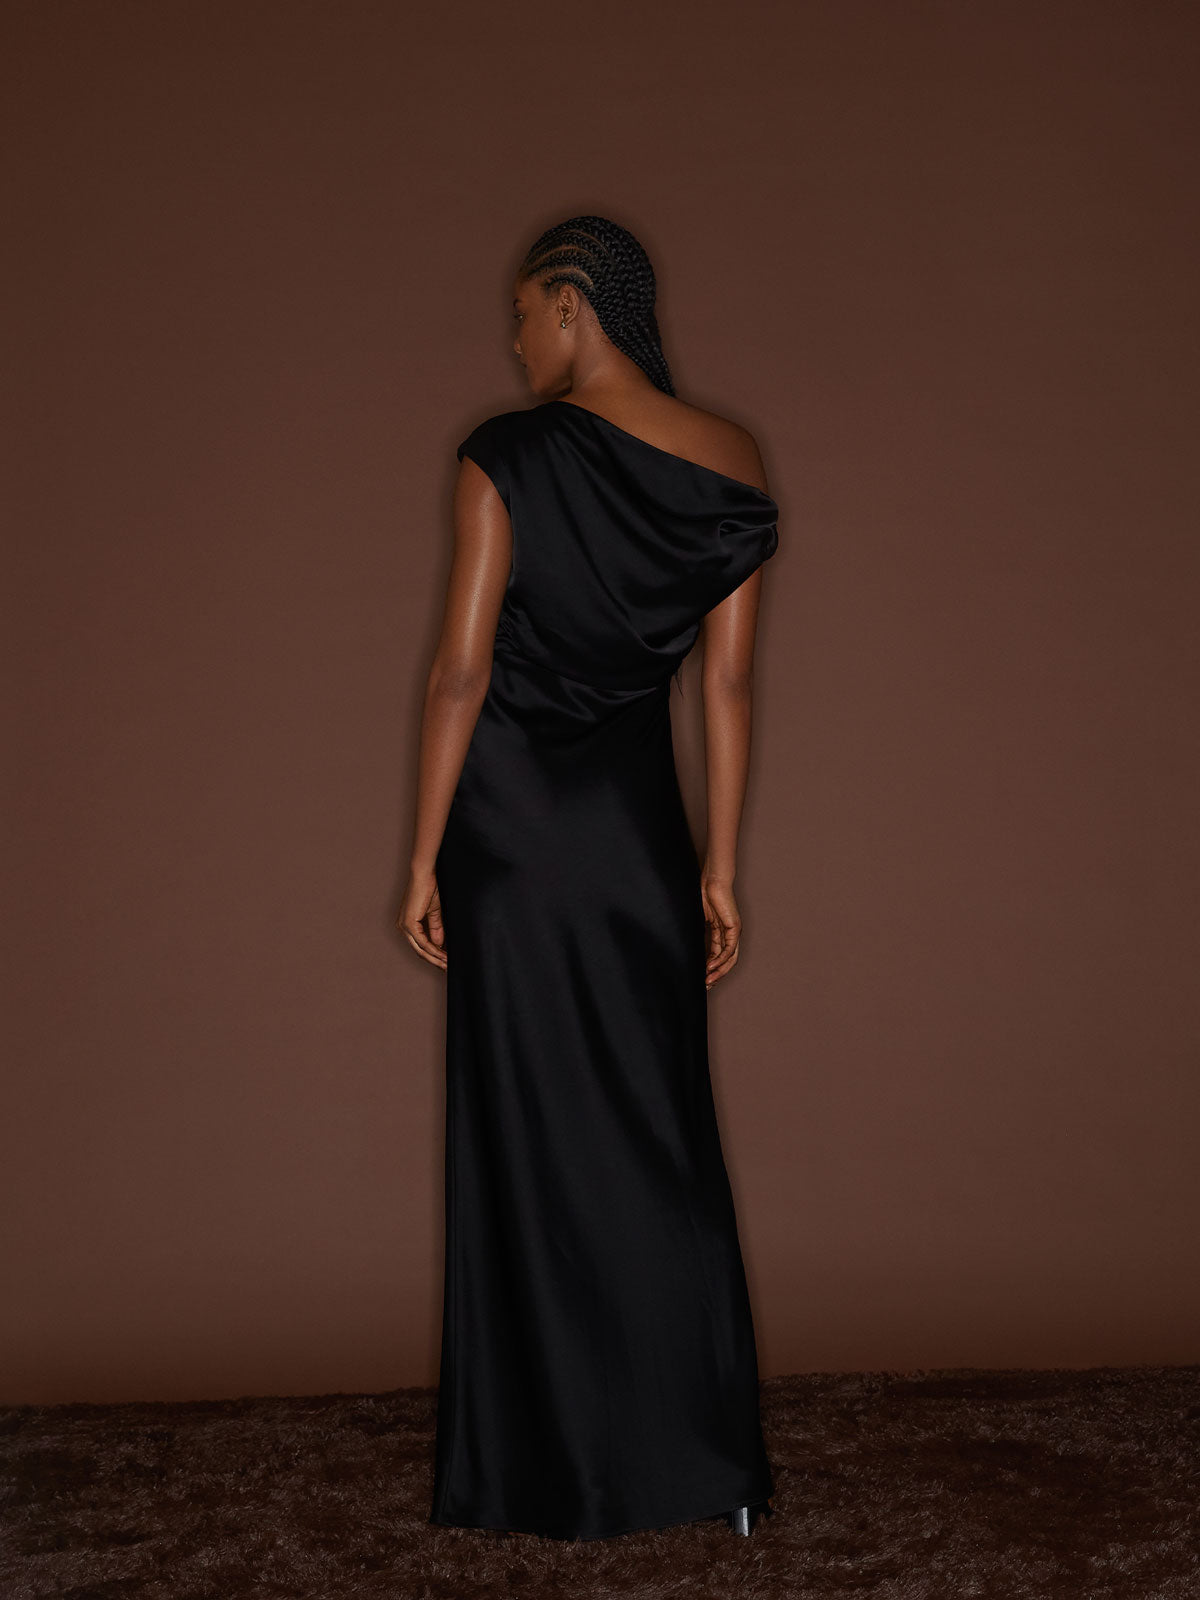 Back view of a female figure wearing the Black 09 Davie Dress